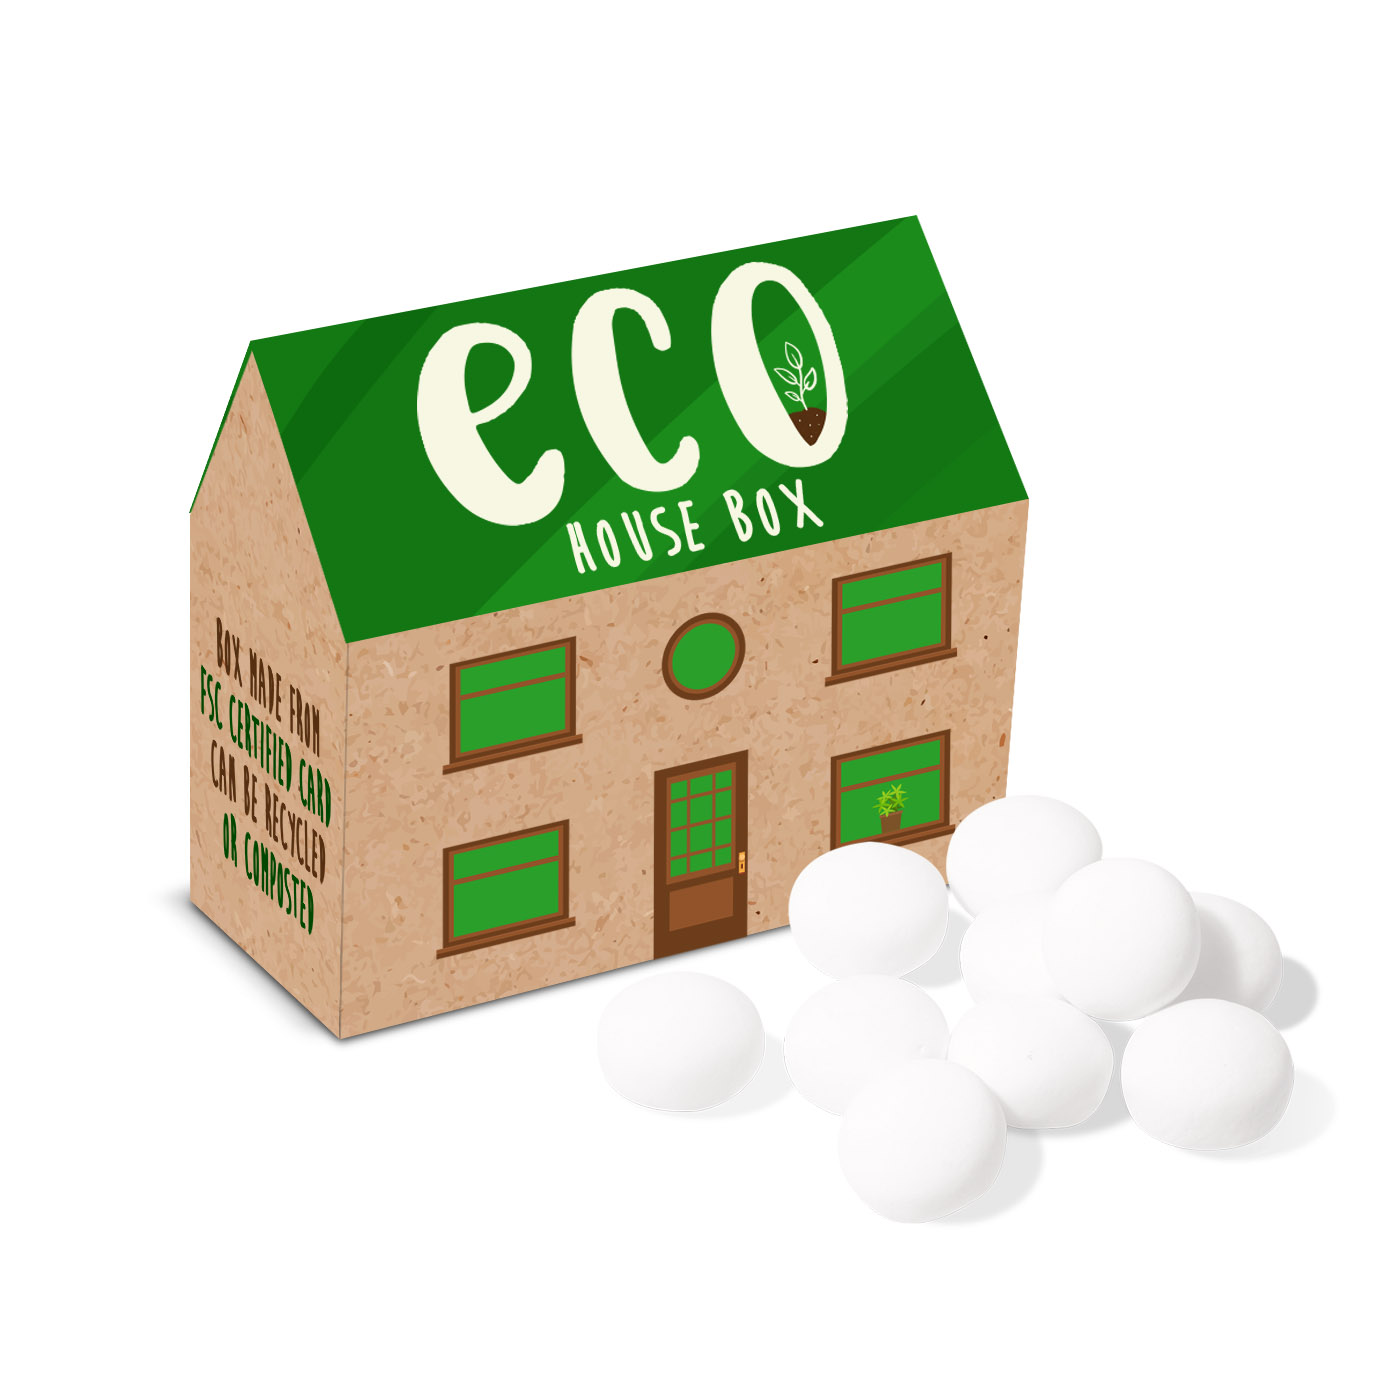 Eco Range – Eco House Box - Mint Imperials